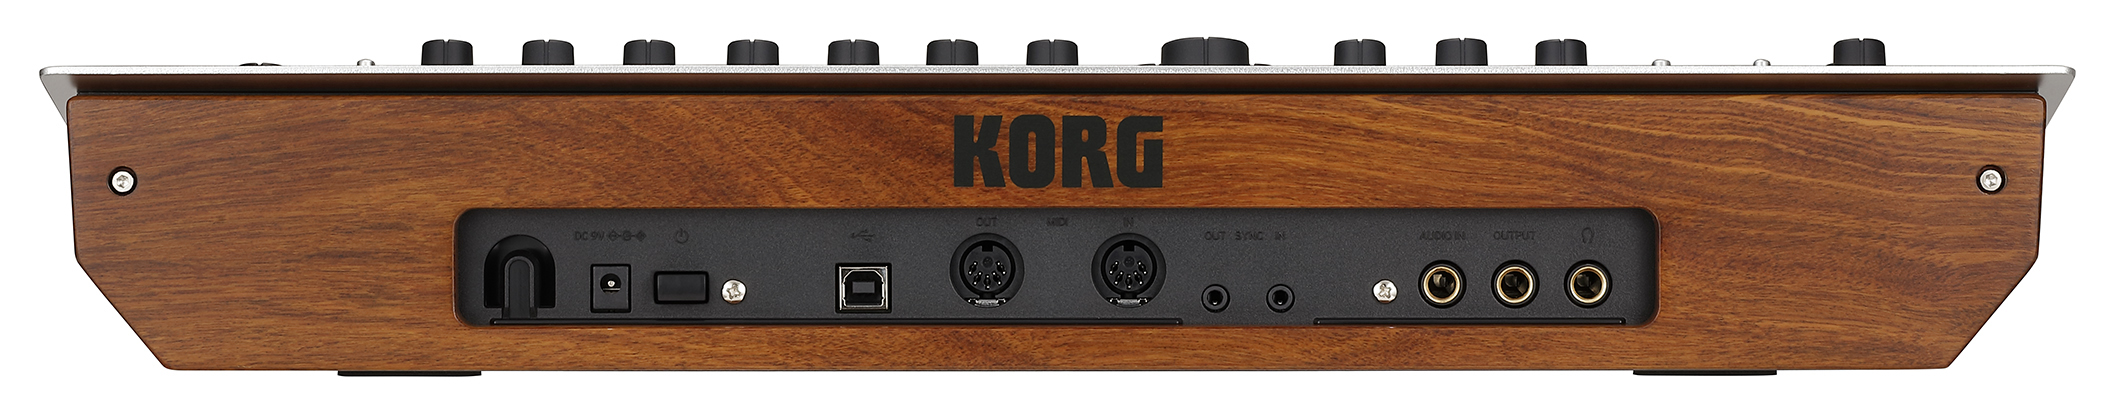 Korg Minilogue - Synthesizer - Variation 4